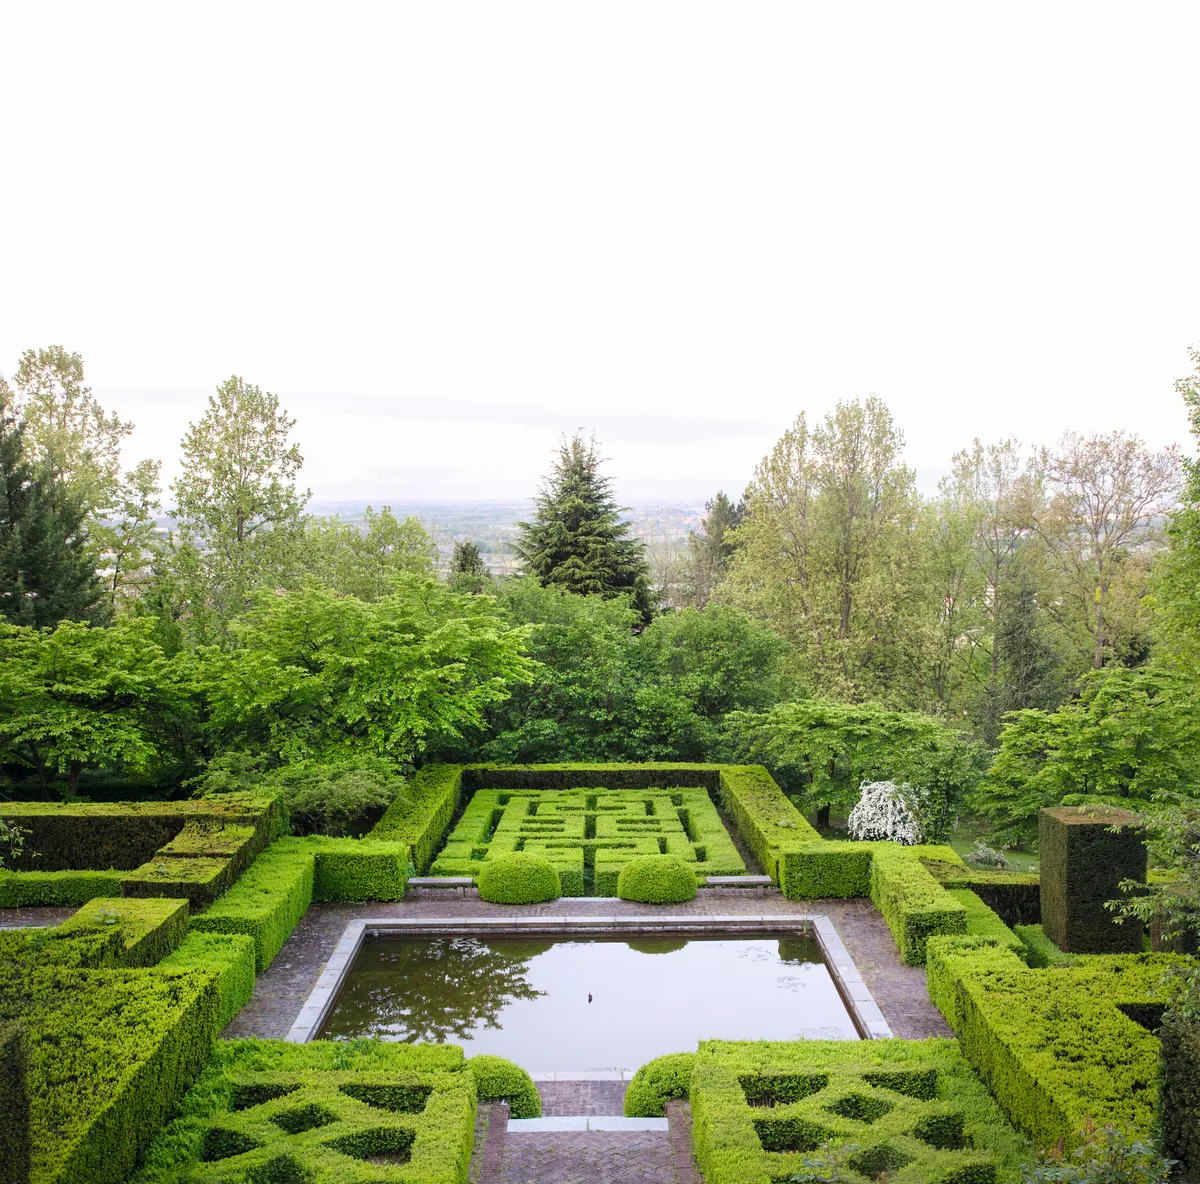 Formal knot garden with relaxed woodland garden on hillside below